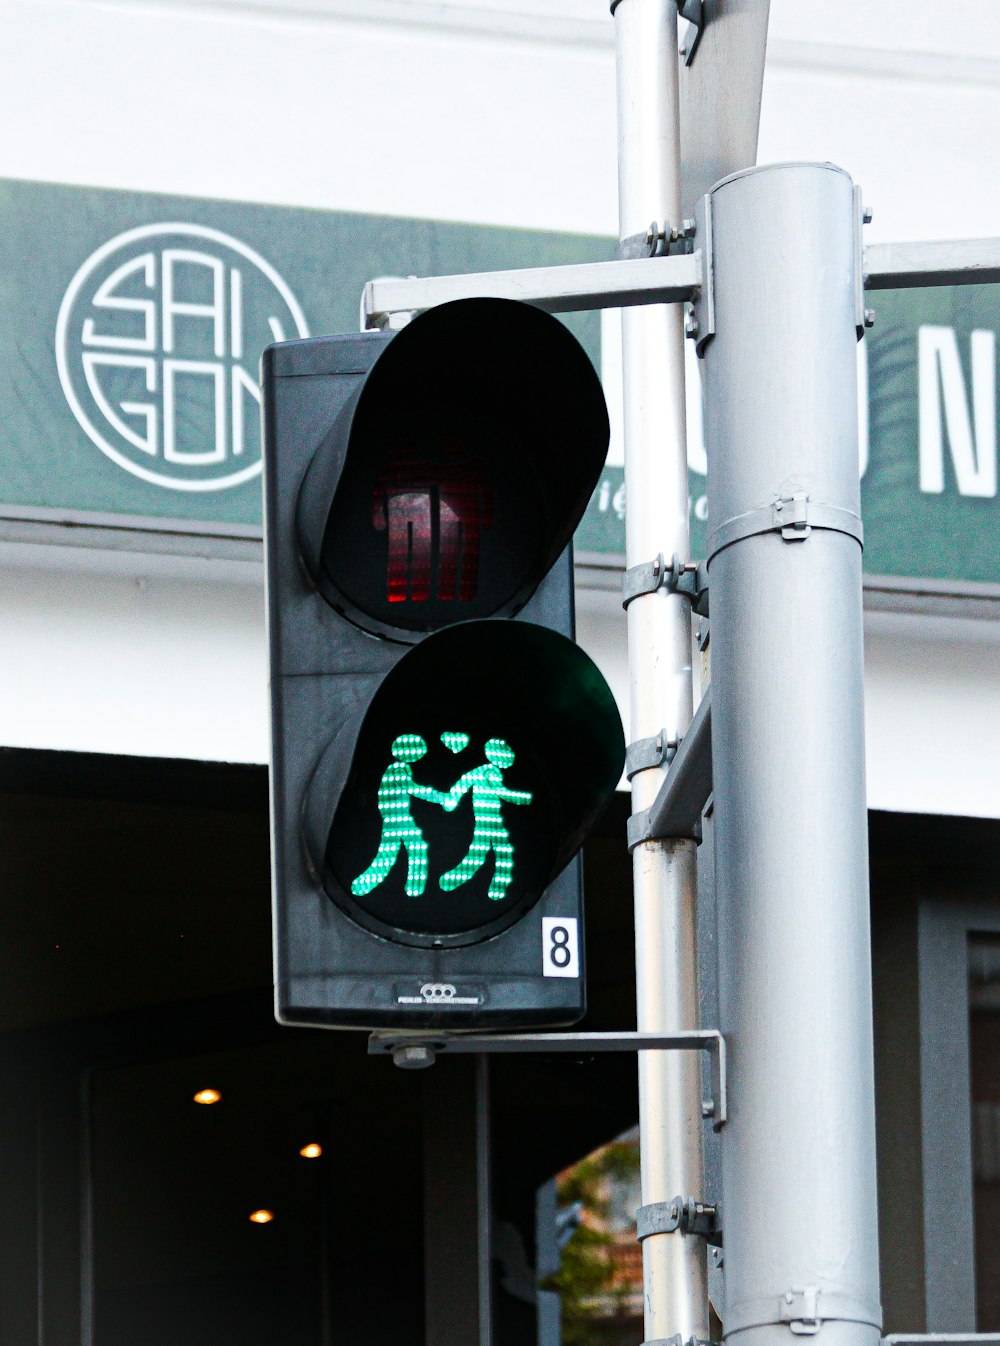 a traffic light with a green pedestrian crossing signal